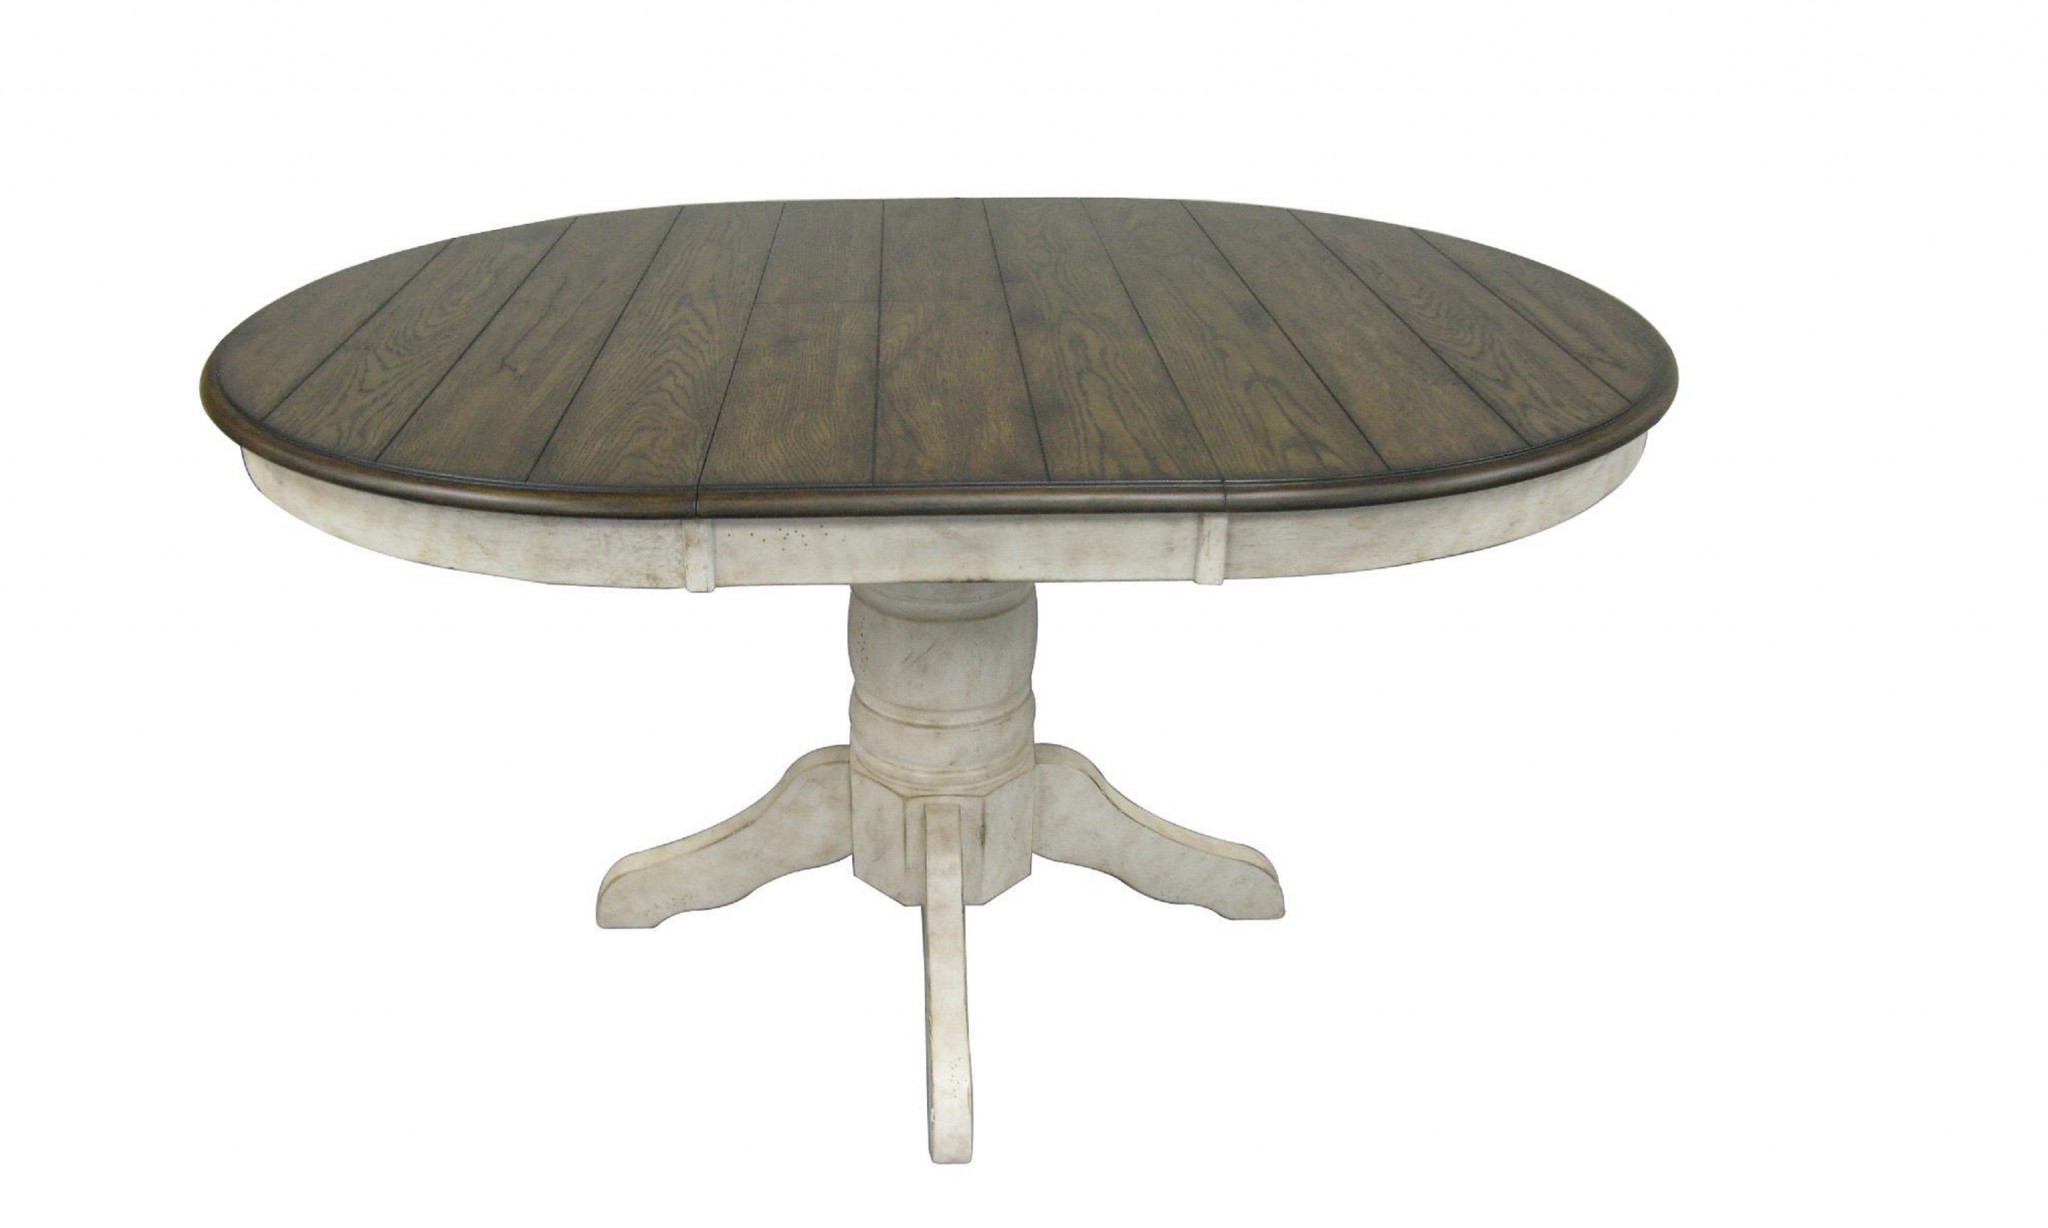 42" X 57" X 30" Vintage States Hardwood Pedestal Dining Table